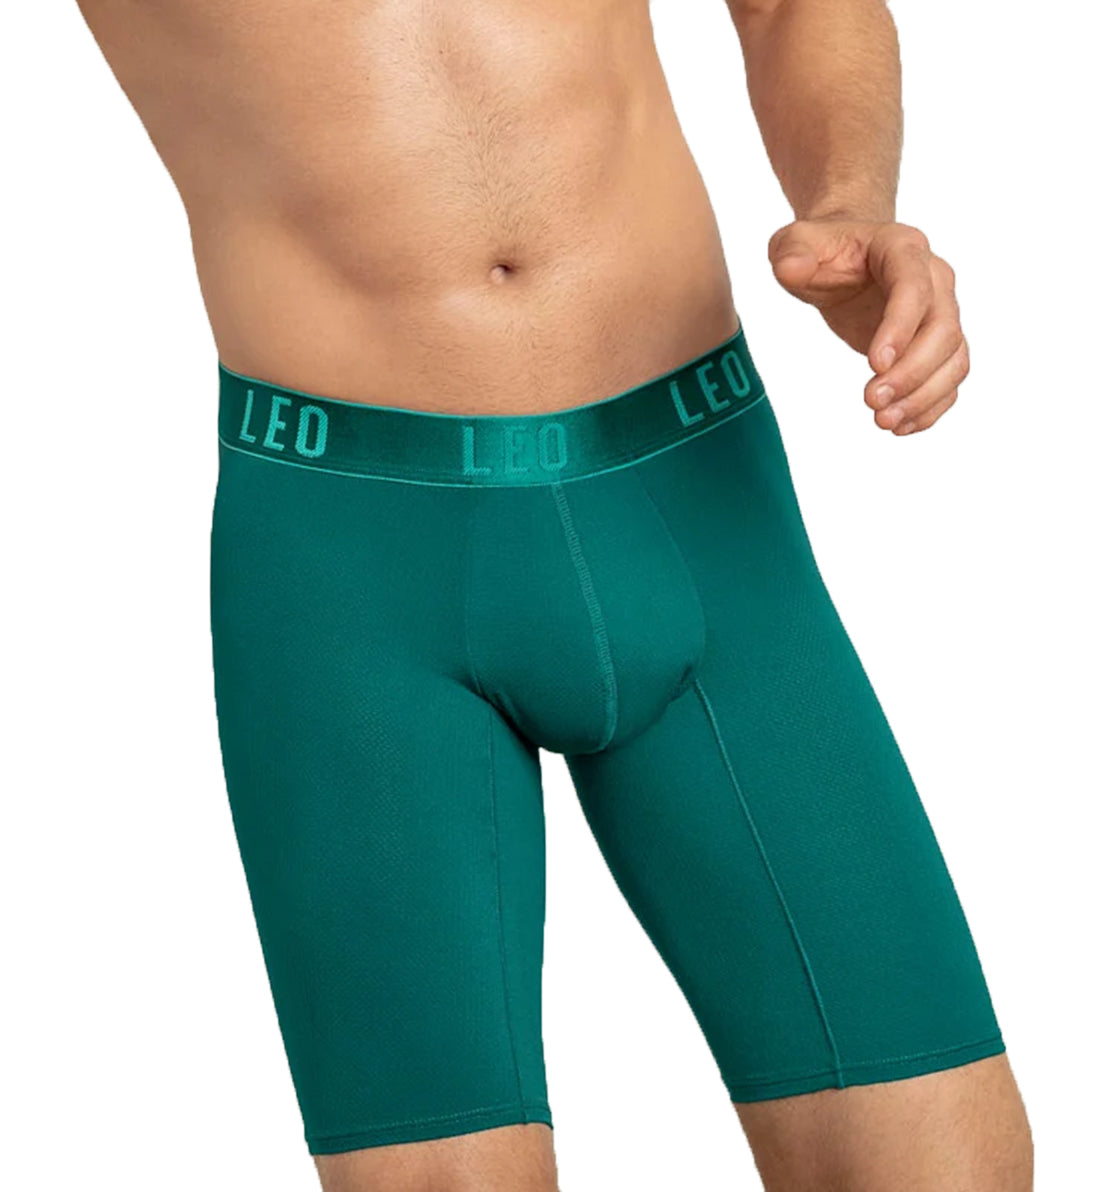 LEO Men's Perfect Fit Long Leg Boxer Brief (033290N),Medium,Green - Green,Medium